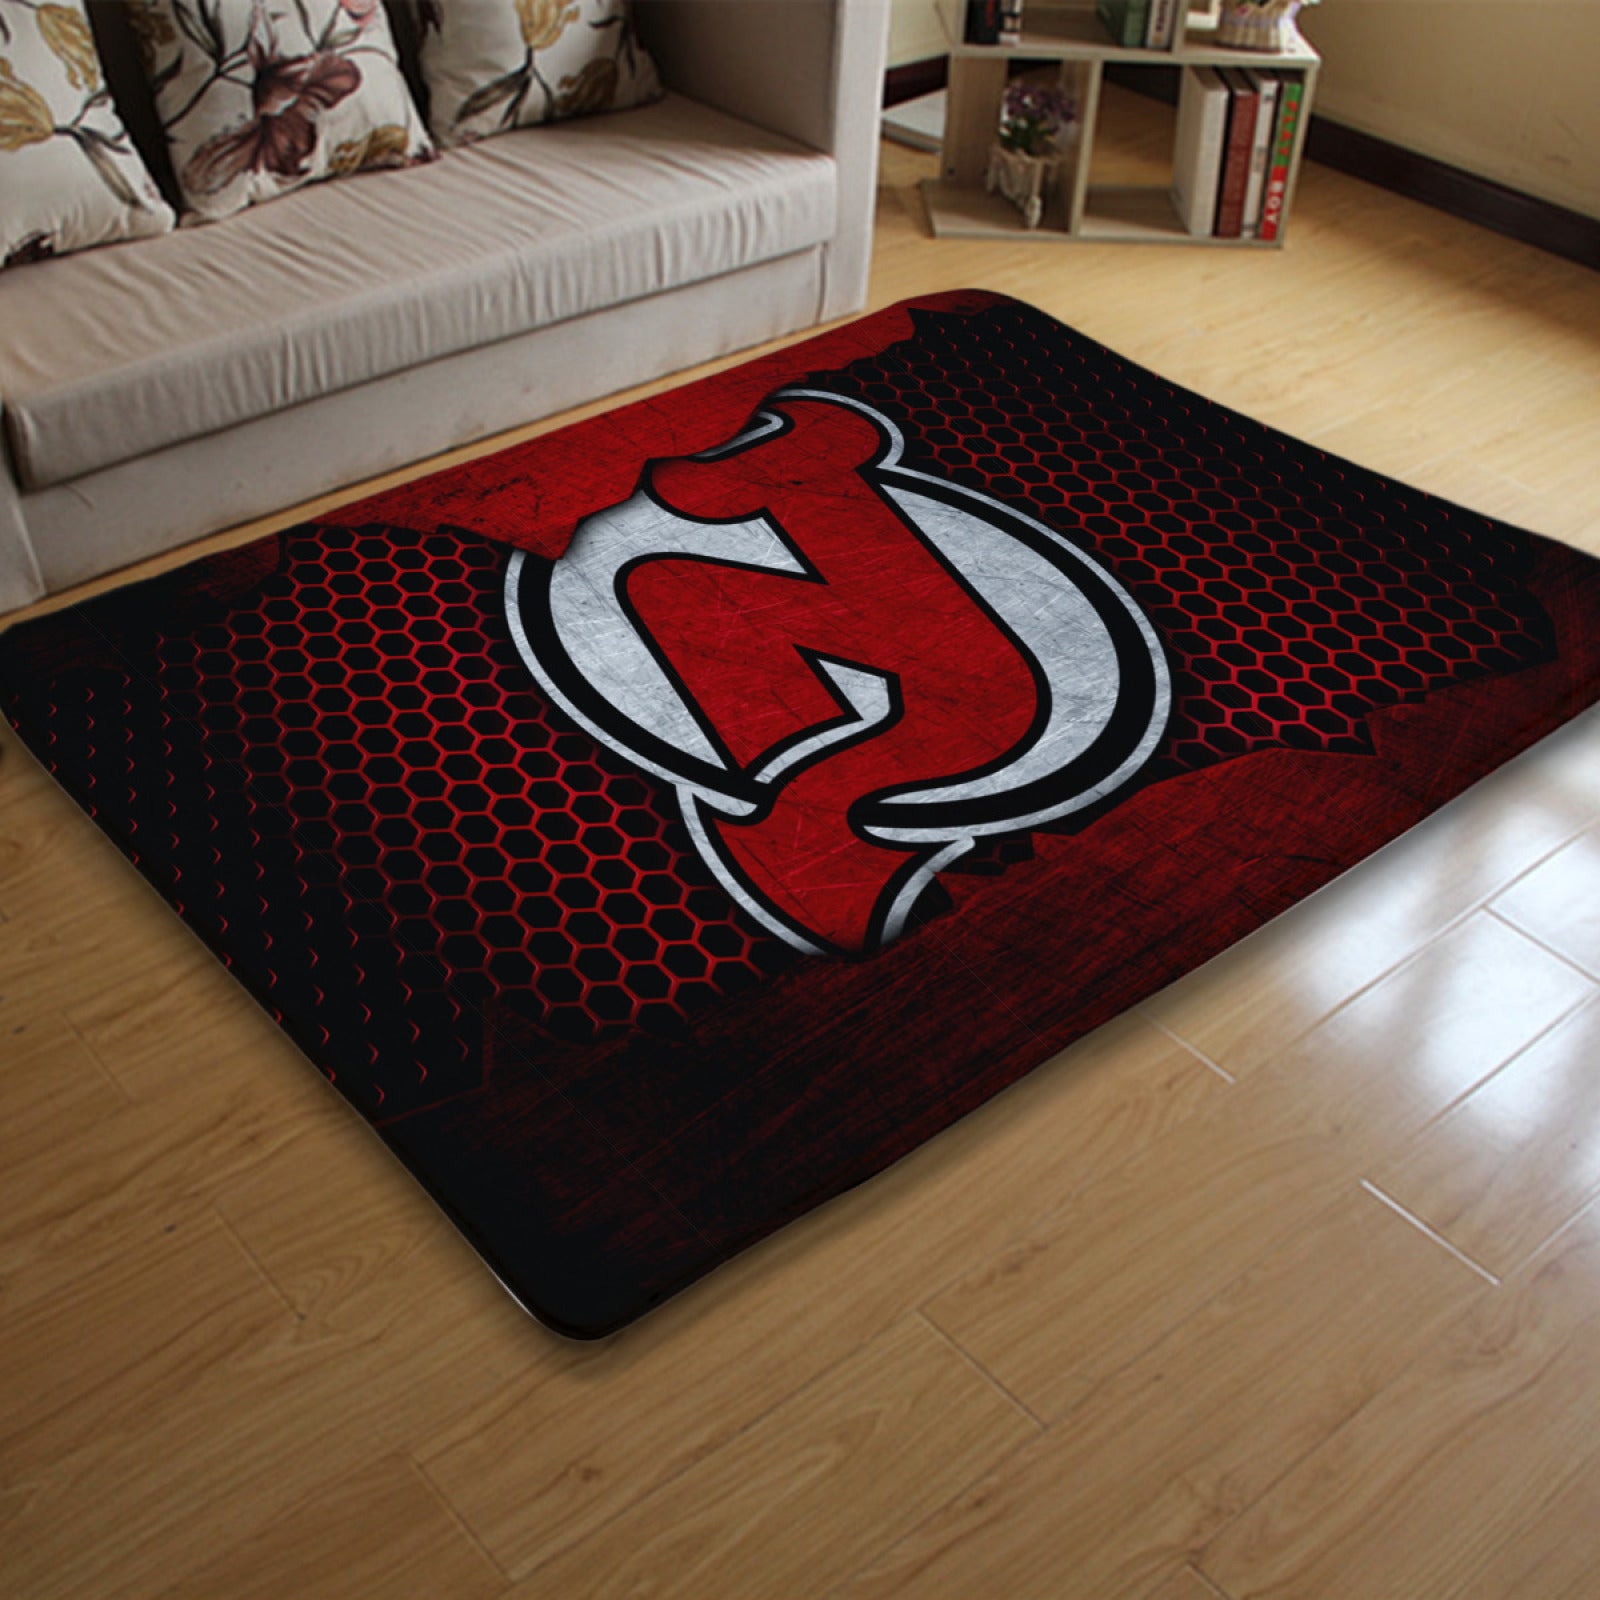 New Jersey Devils Hockey League Carpet Living Room Bedroom Mats Kitchen Bathroom Rugs